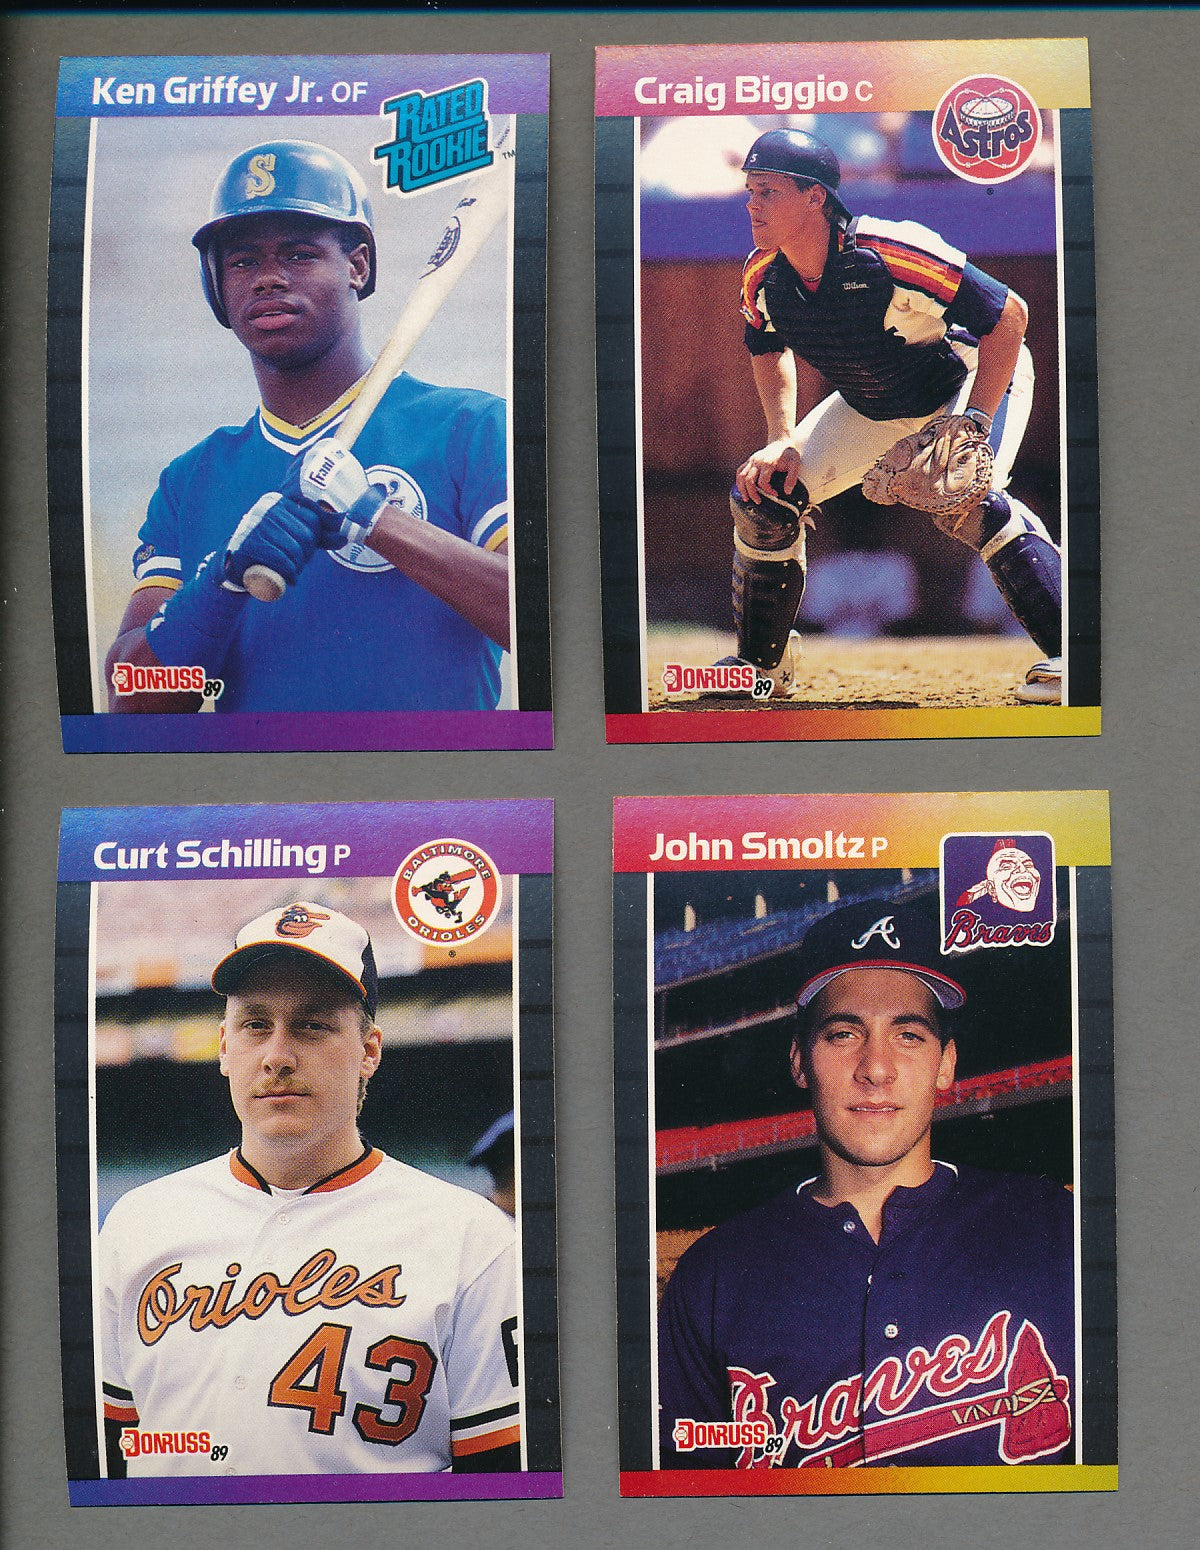 1989 Donruss Baseball Complete Set (660) NM/MT MT